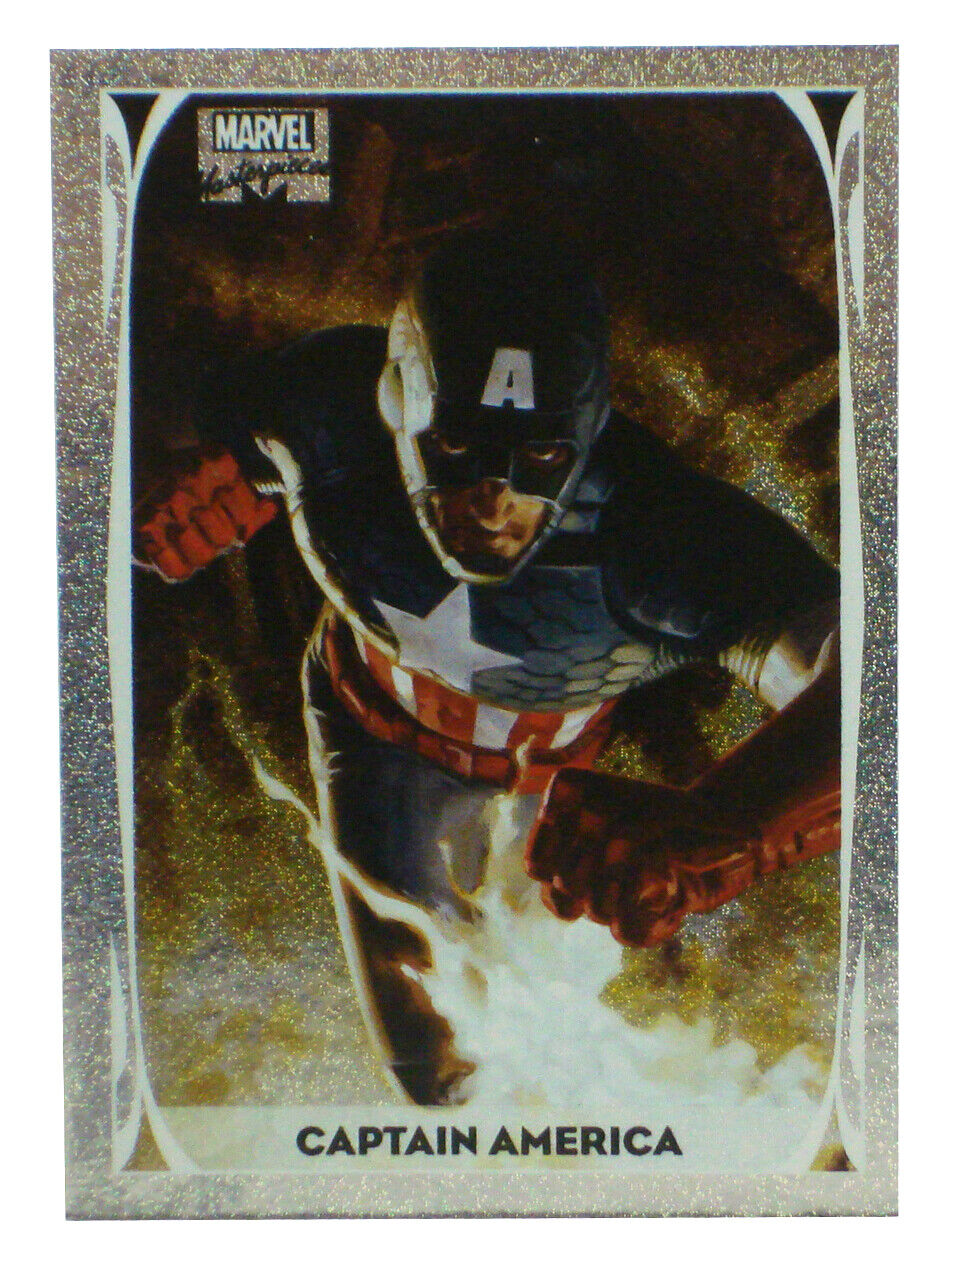 2020 Upper Deck Marvel Masterpieces Captain America Holofoil Card 19/20 Palumbo